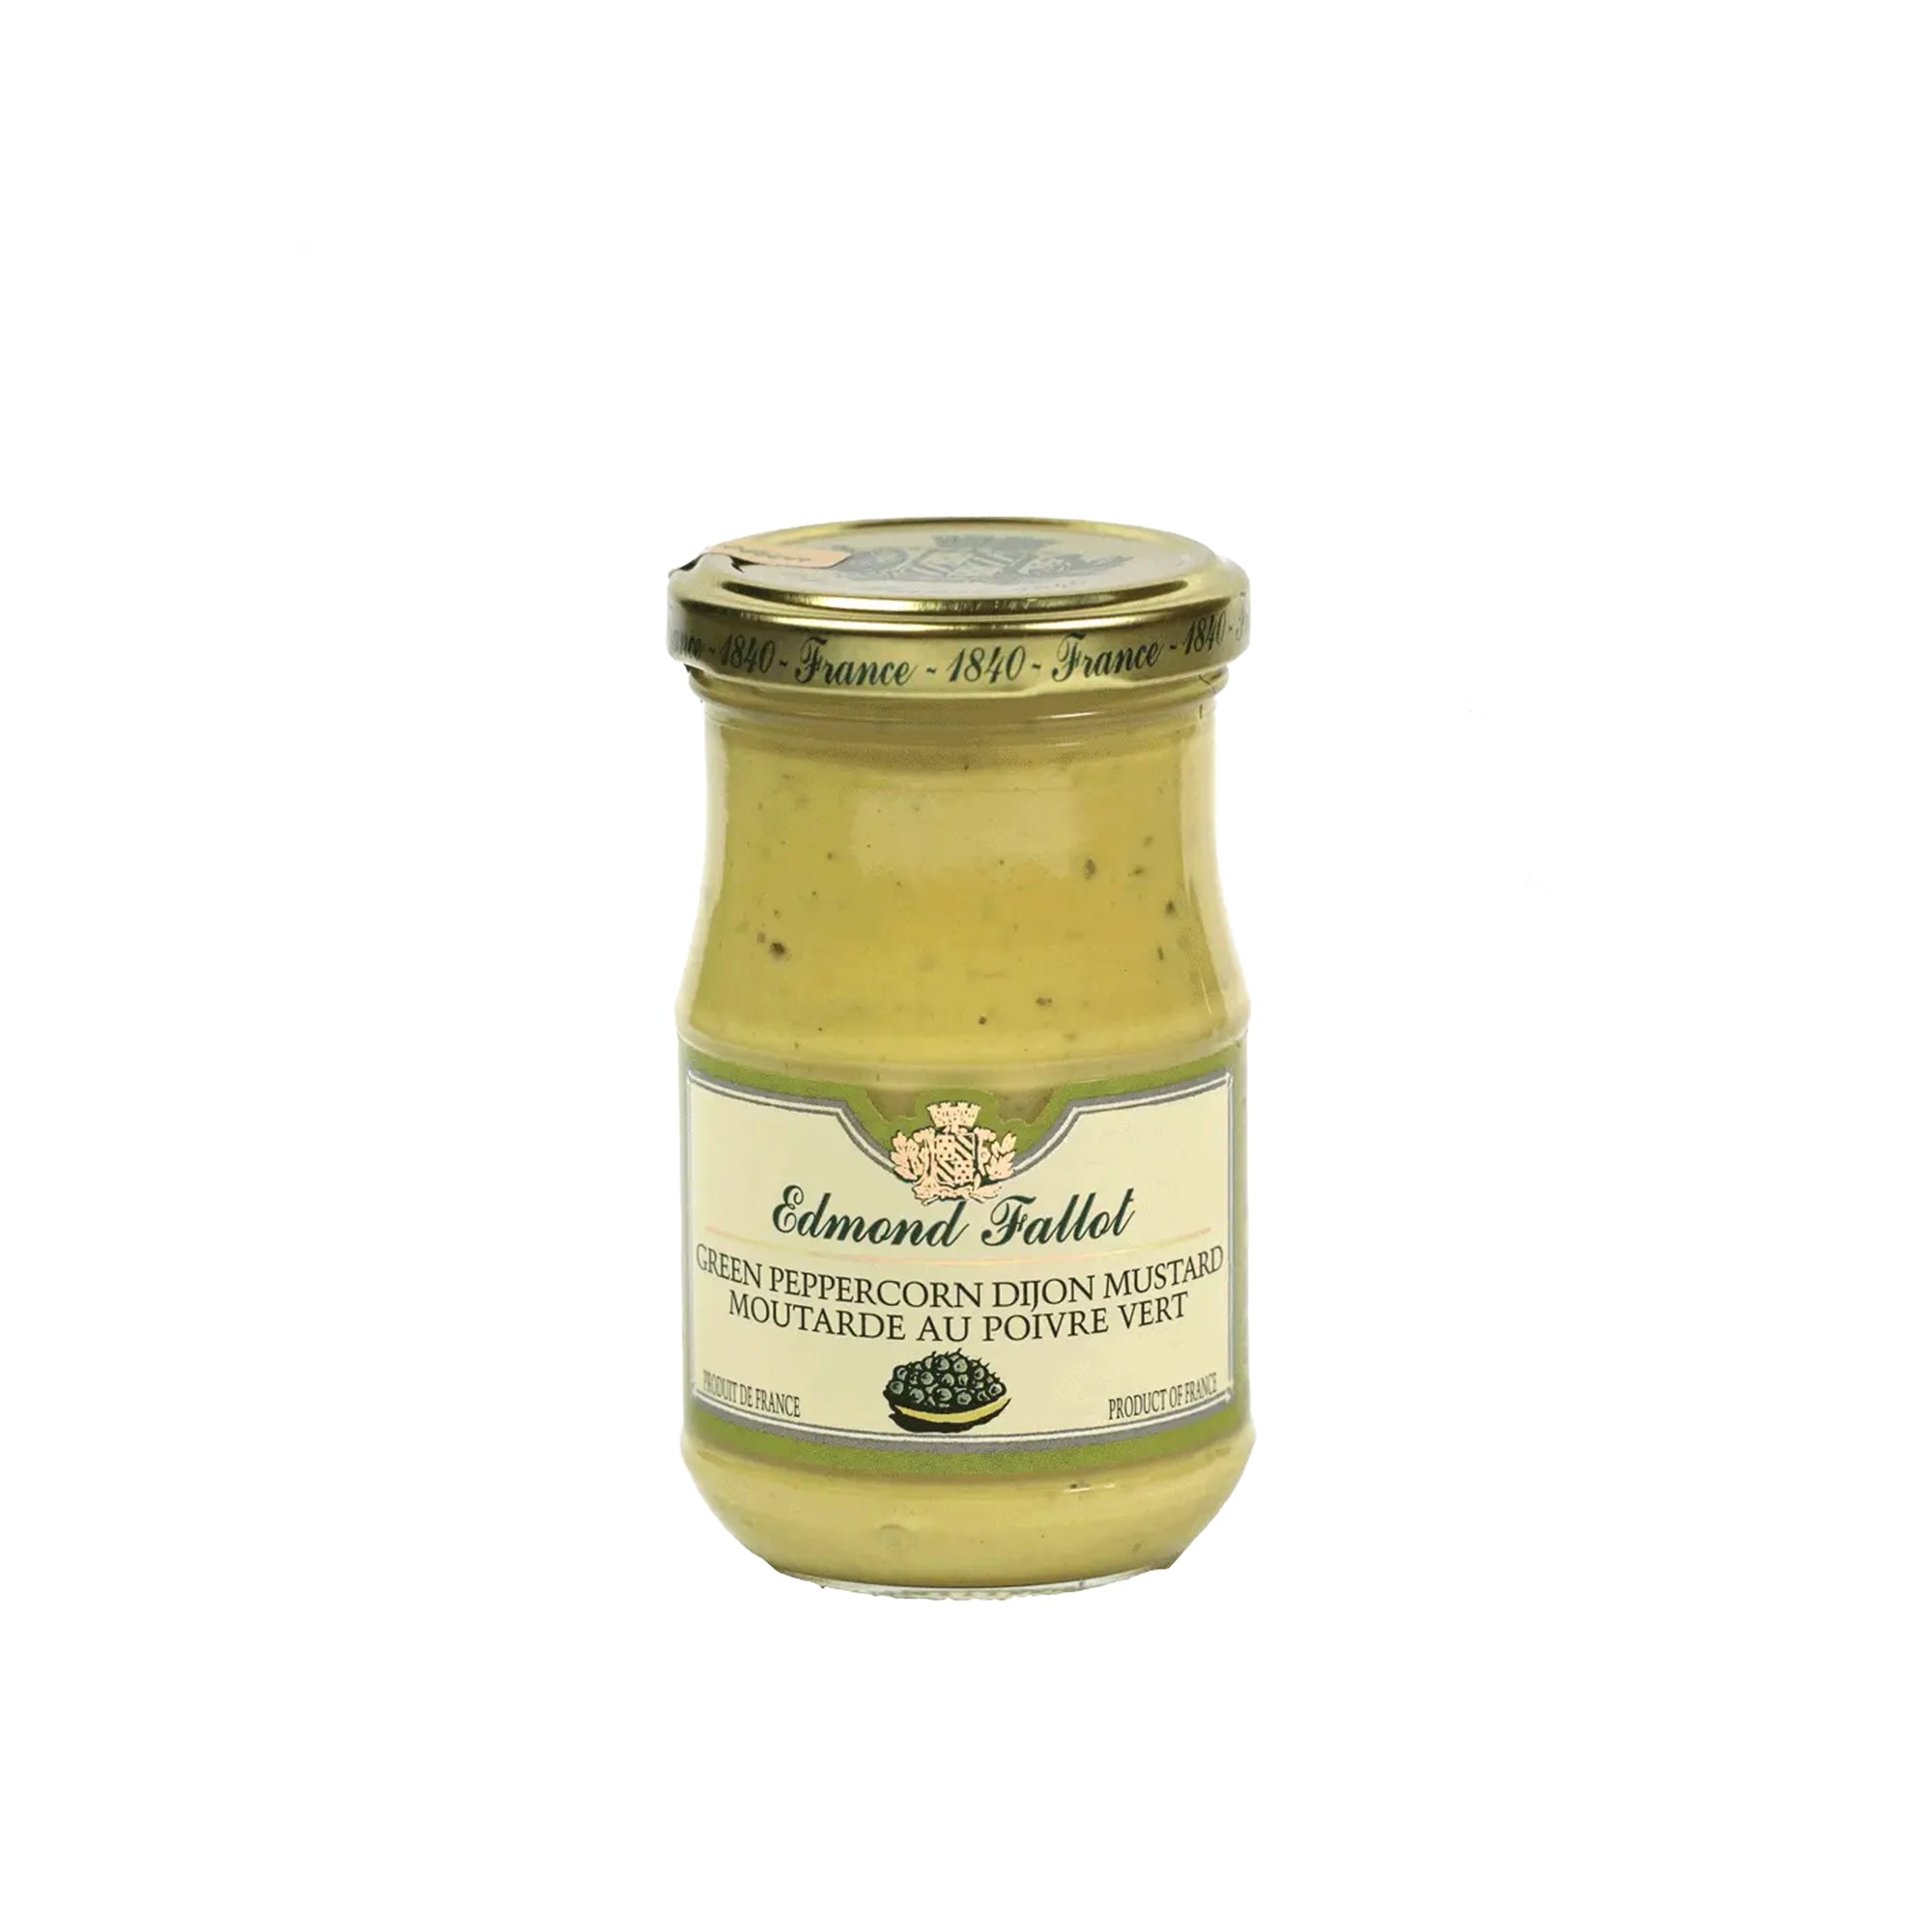 Green Peppercorn Dijon Mustard